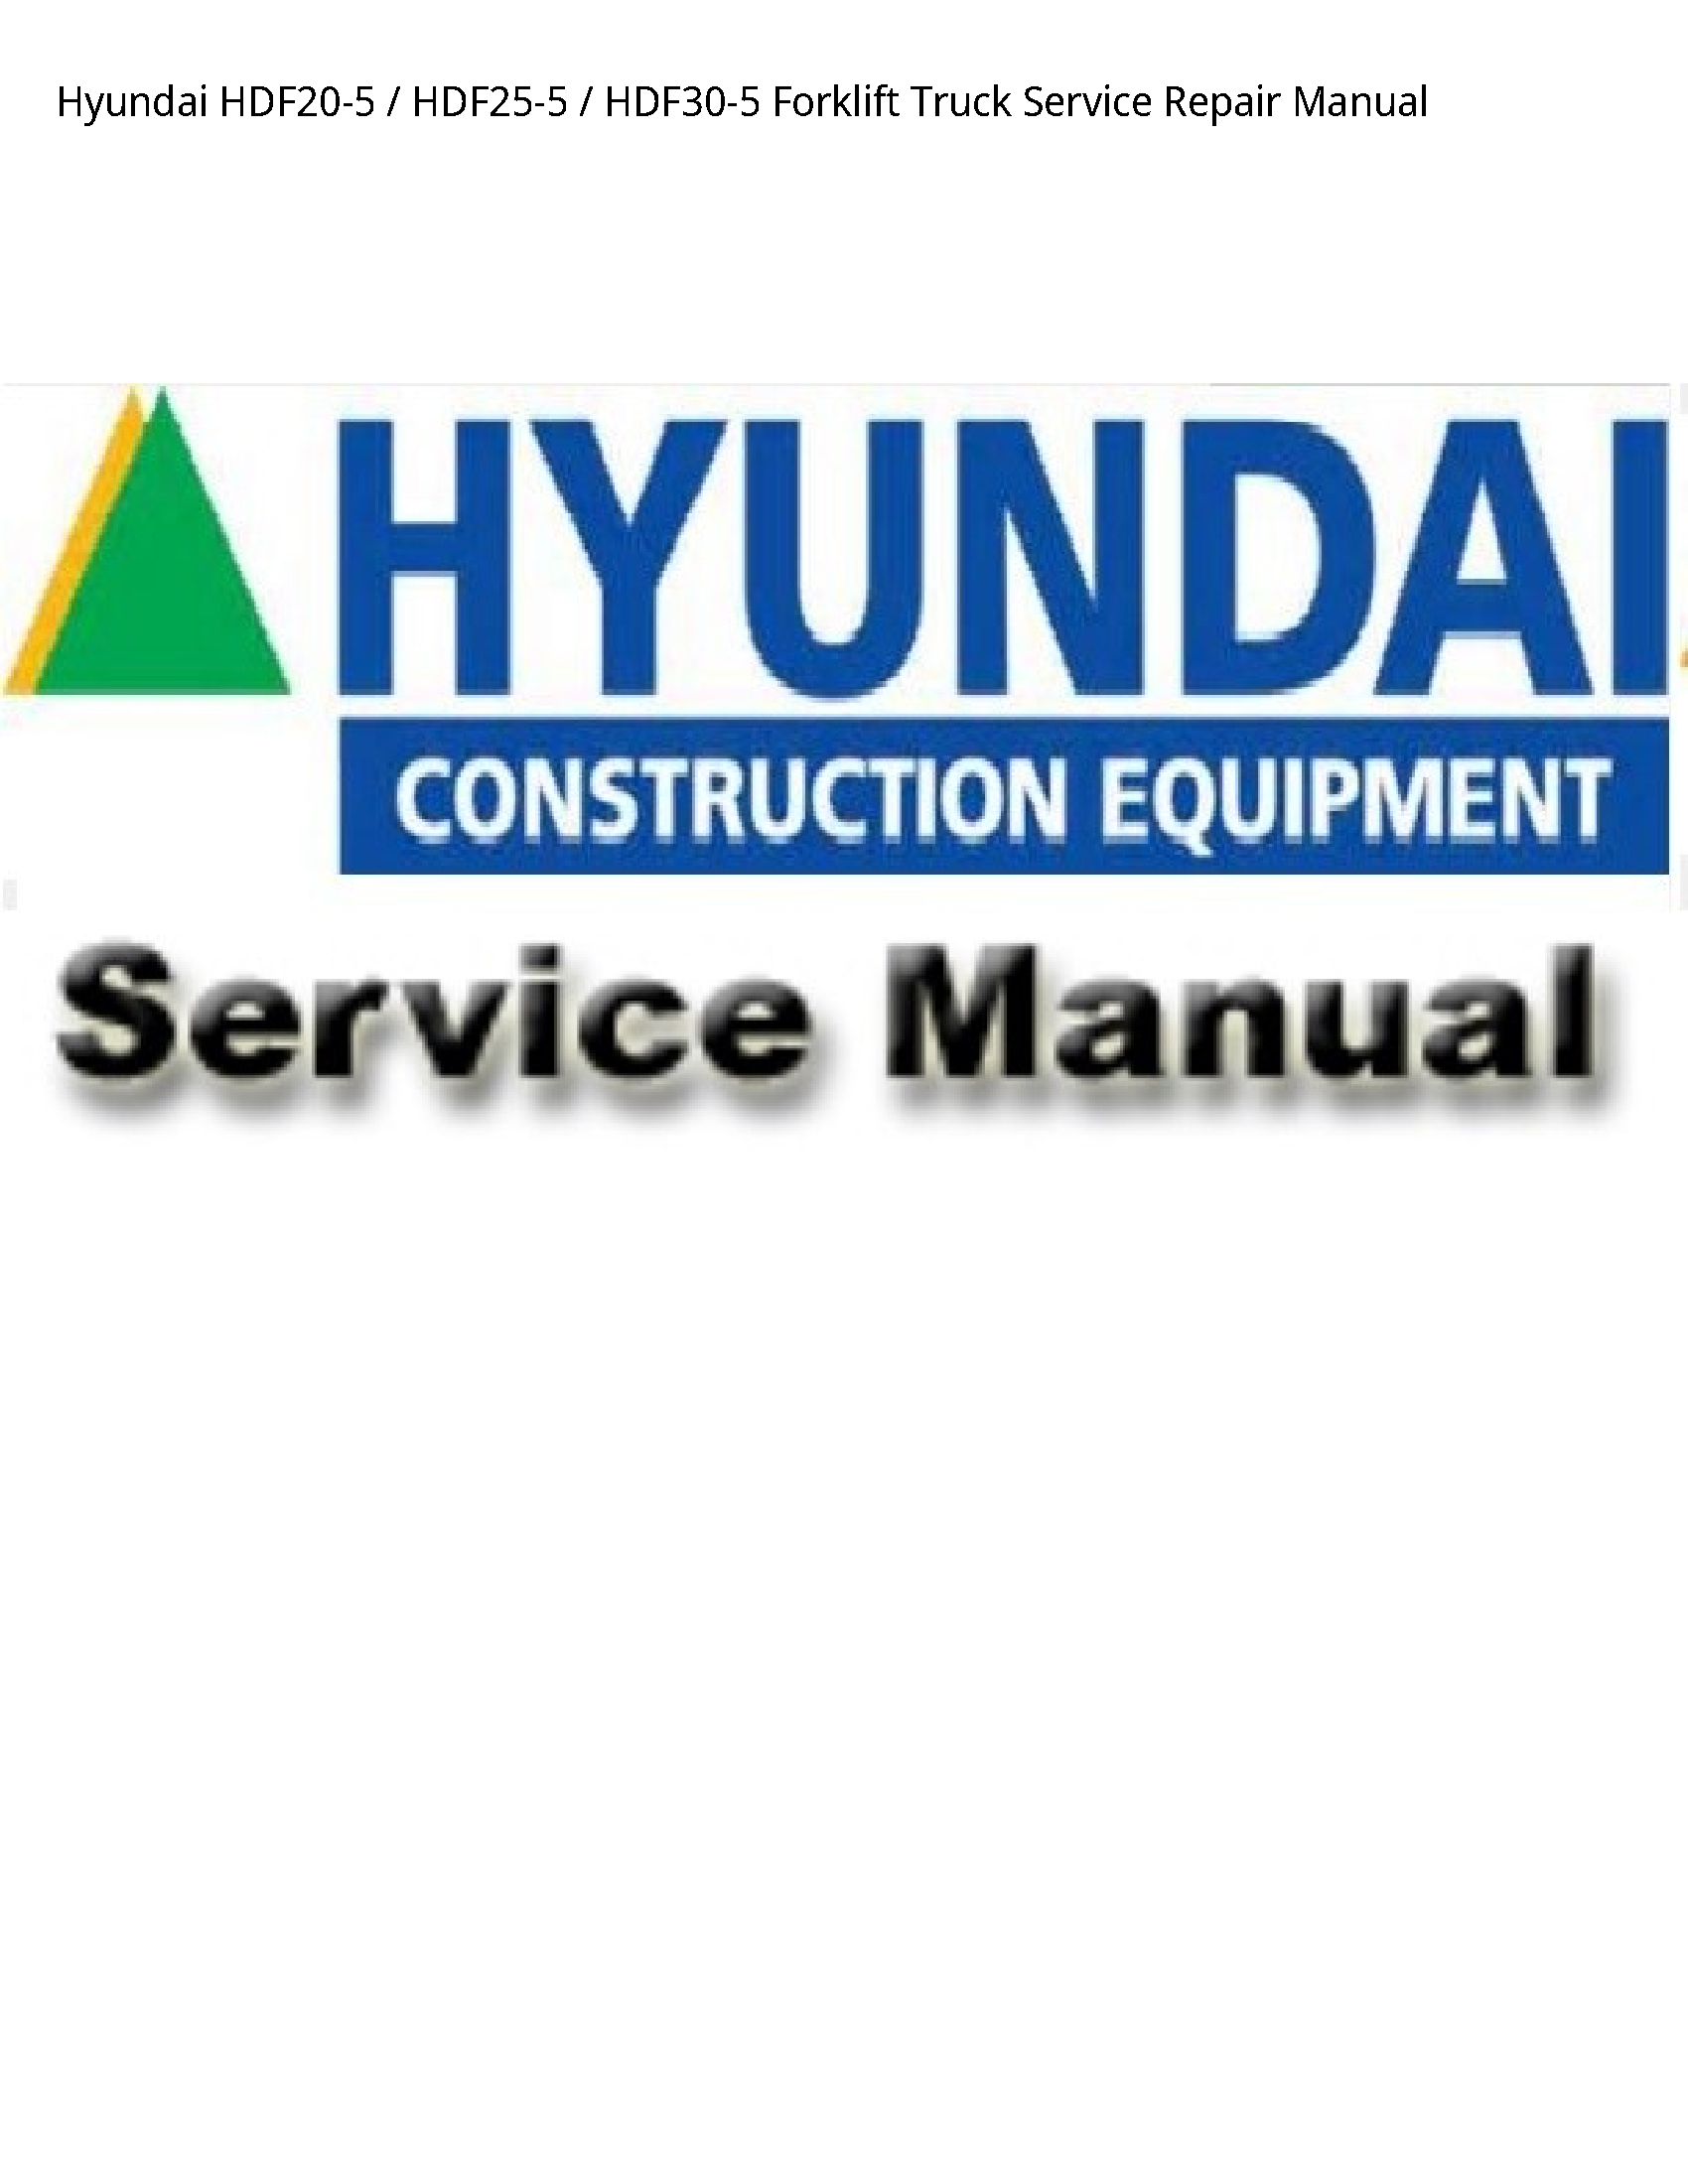 Hyundai HDF20-5 Forklift Truck manual